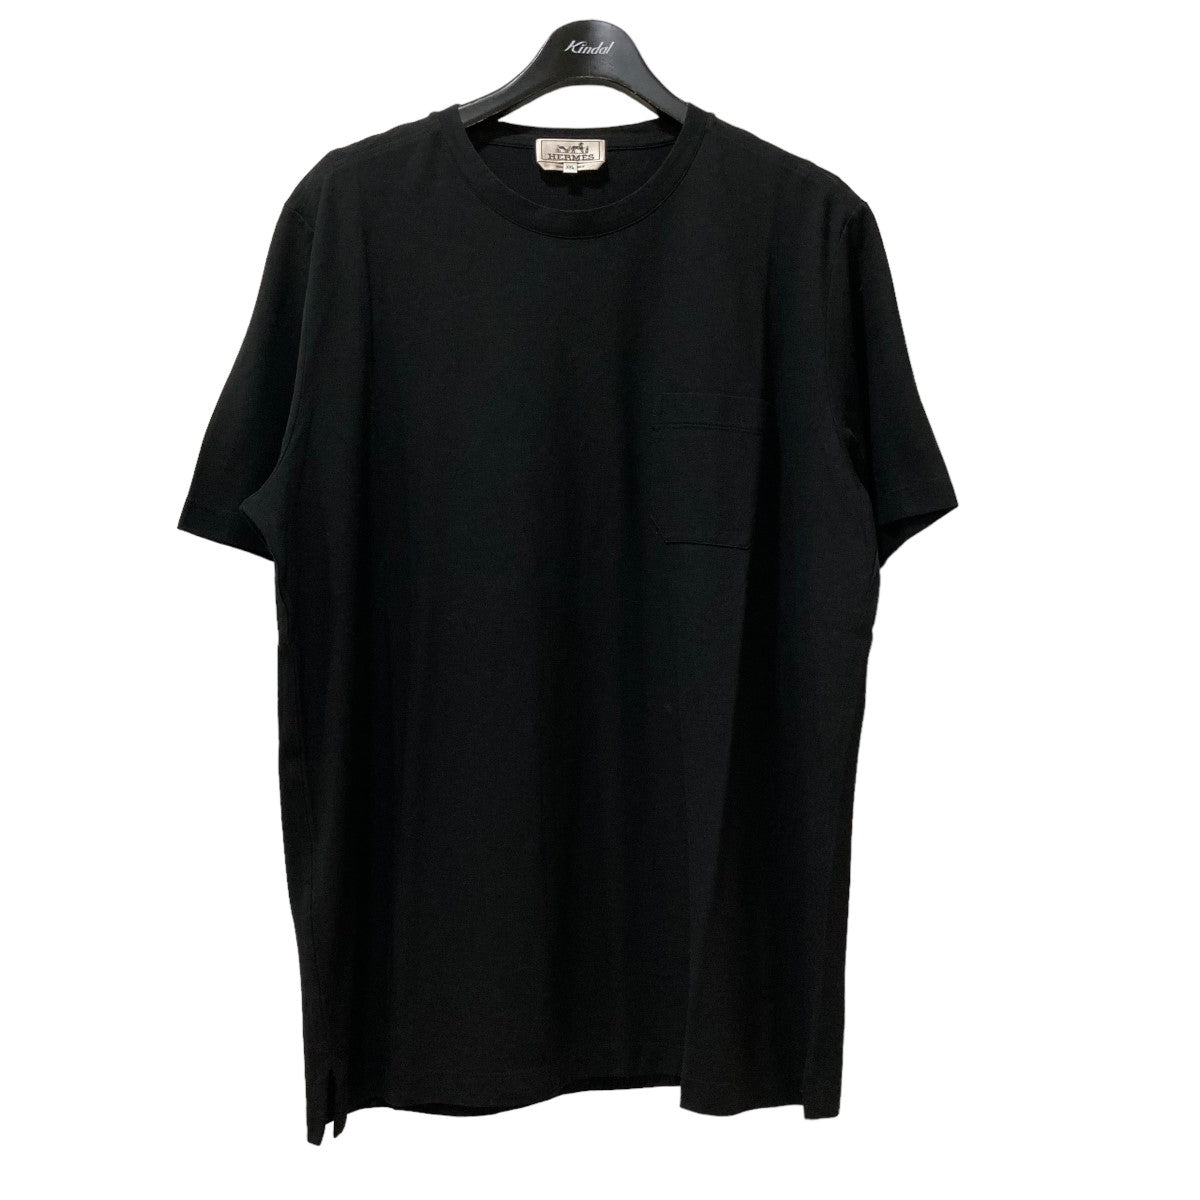 HERMES(エルメス) 胸ポケット半袖Tシャツ 91-5746 91-5746 ブラック 